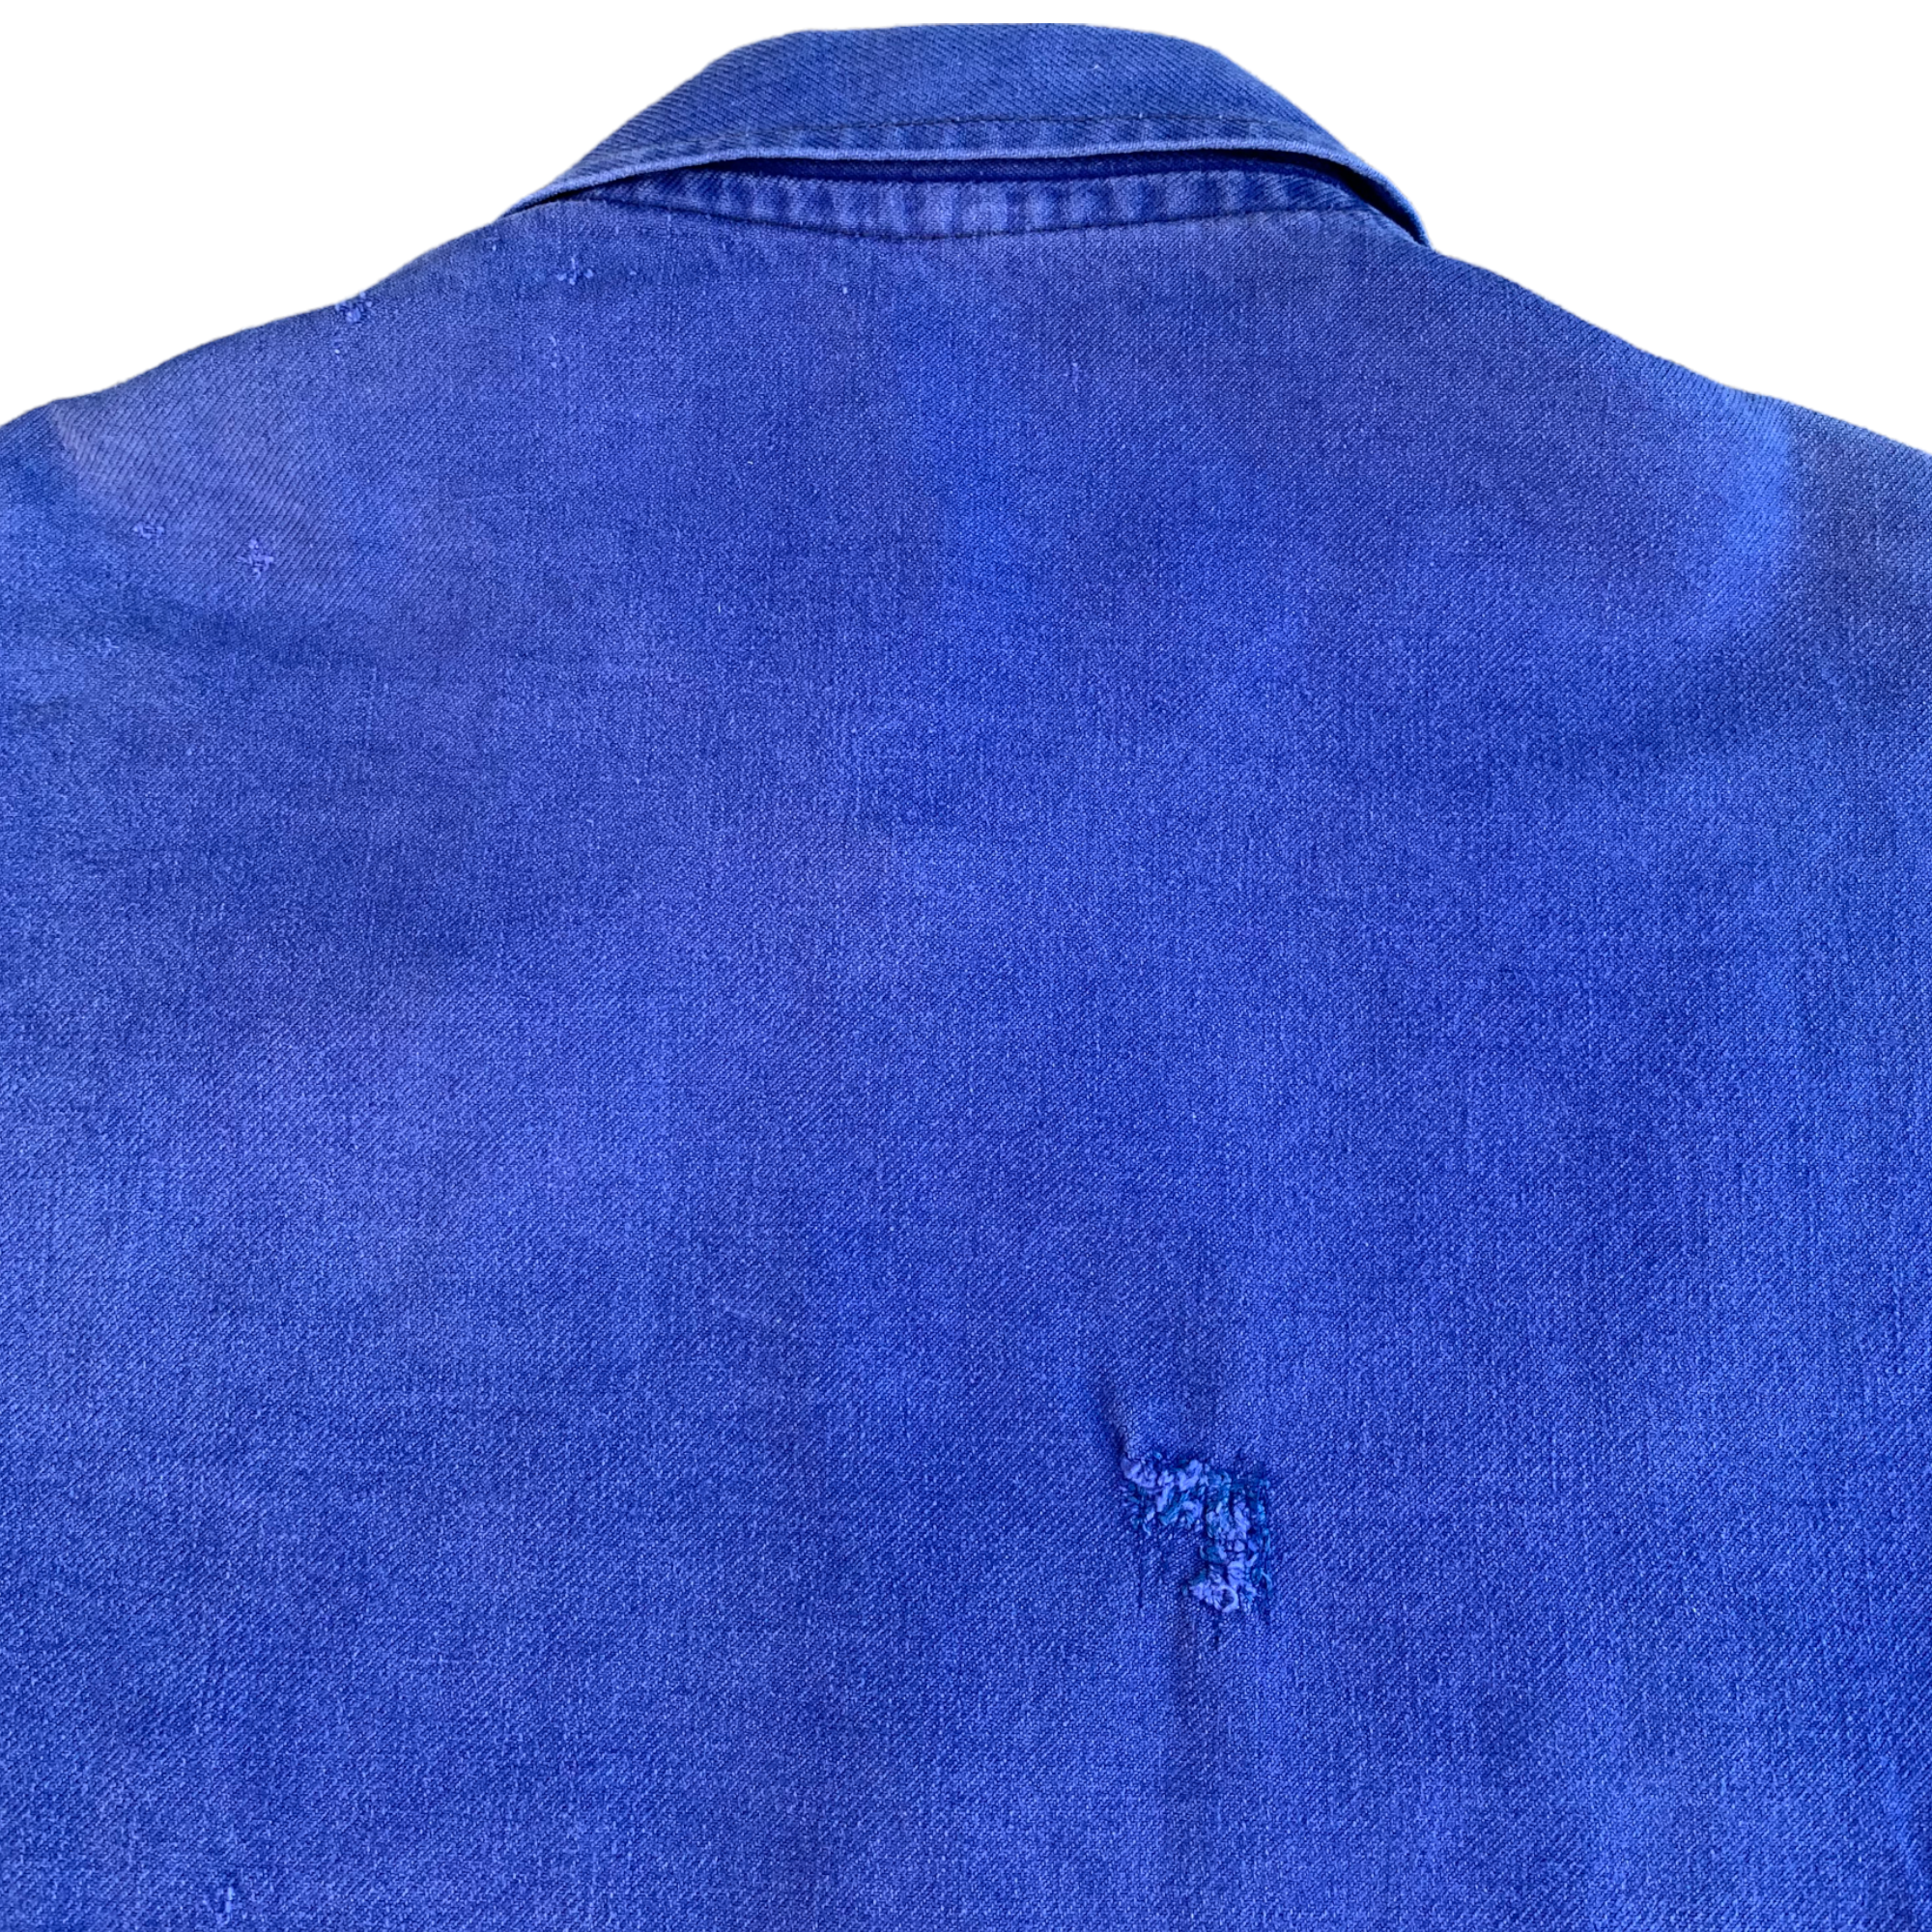 1950s Bleu De Travail French Chore Jacket with Shoddy Indigo Repairs - Indigo Blue - M